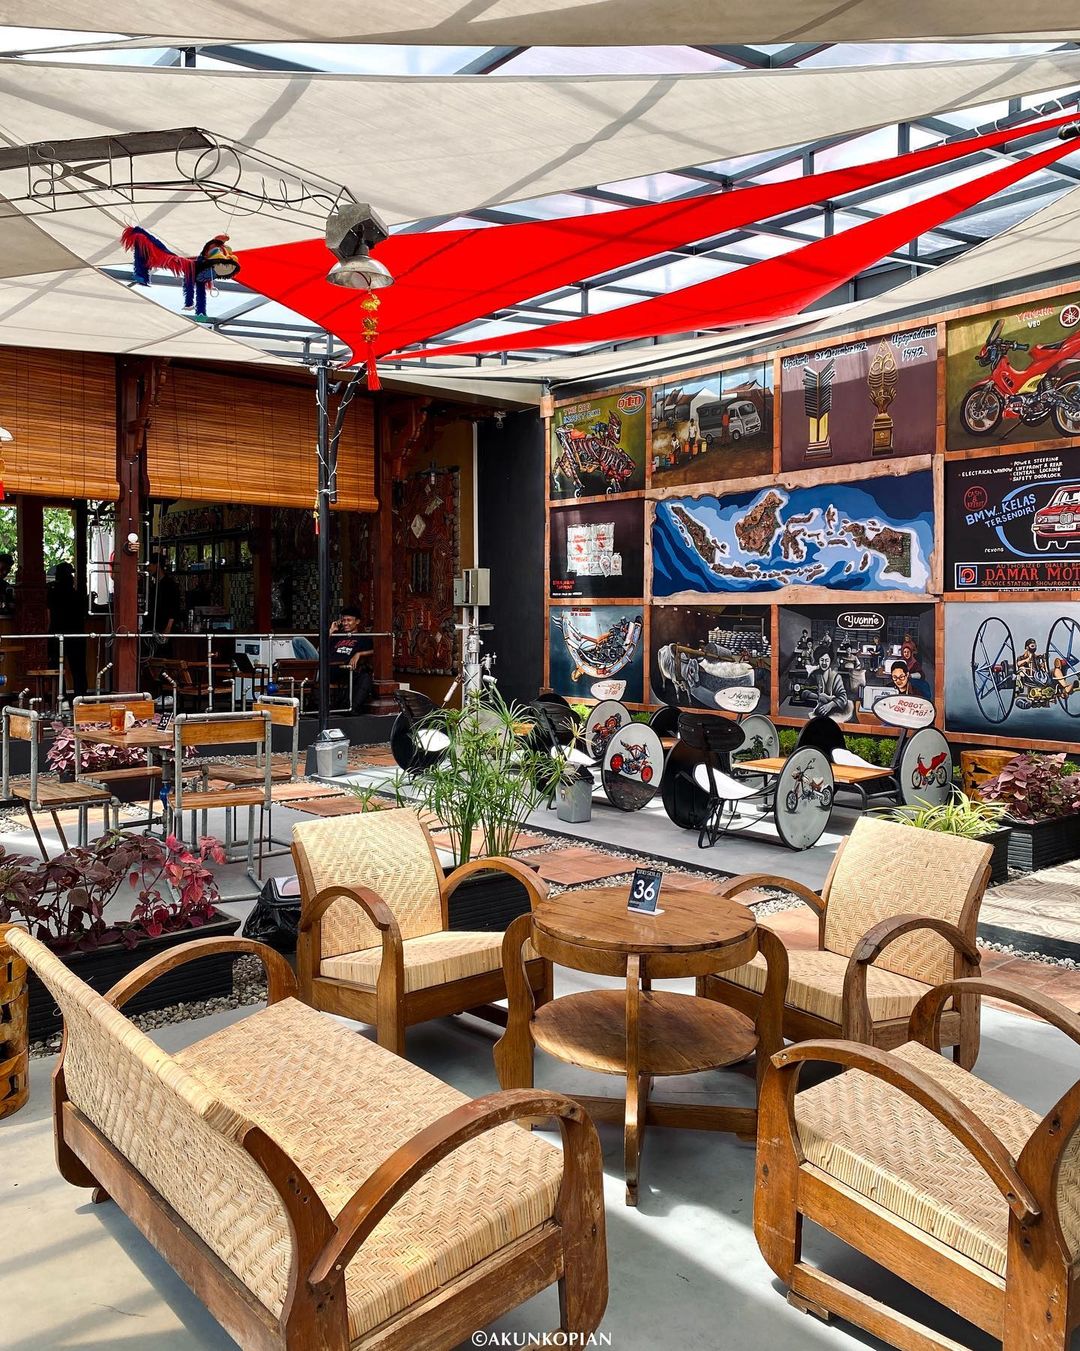 Harga Menu Ono Solo Coffee Eatery Image From @akunkopian